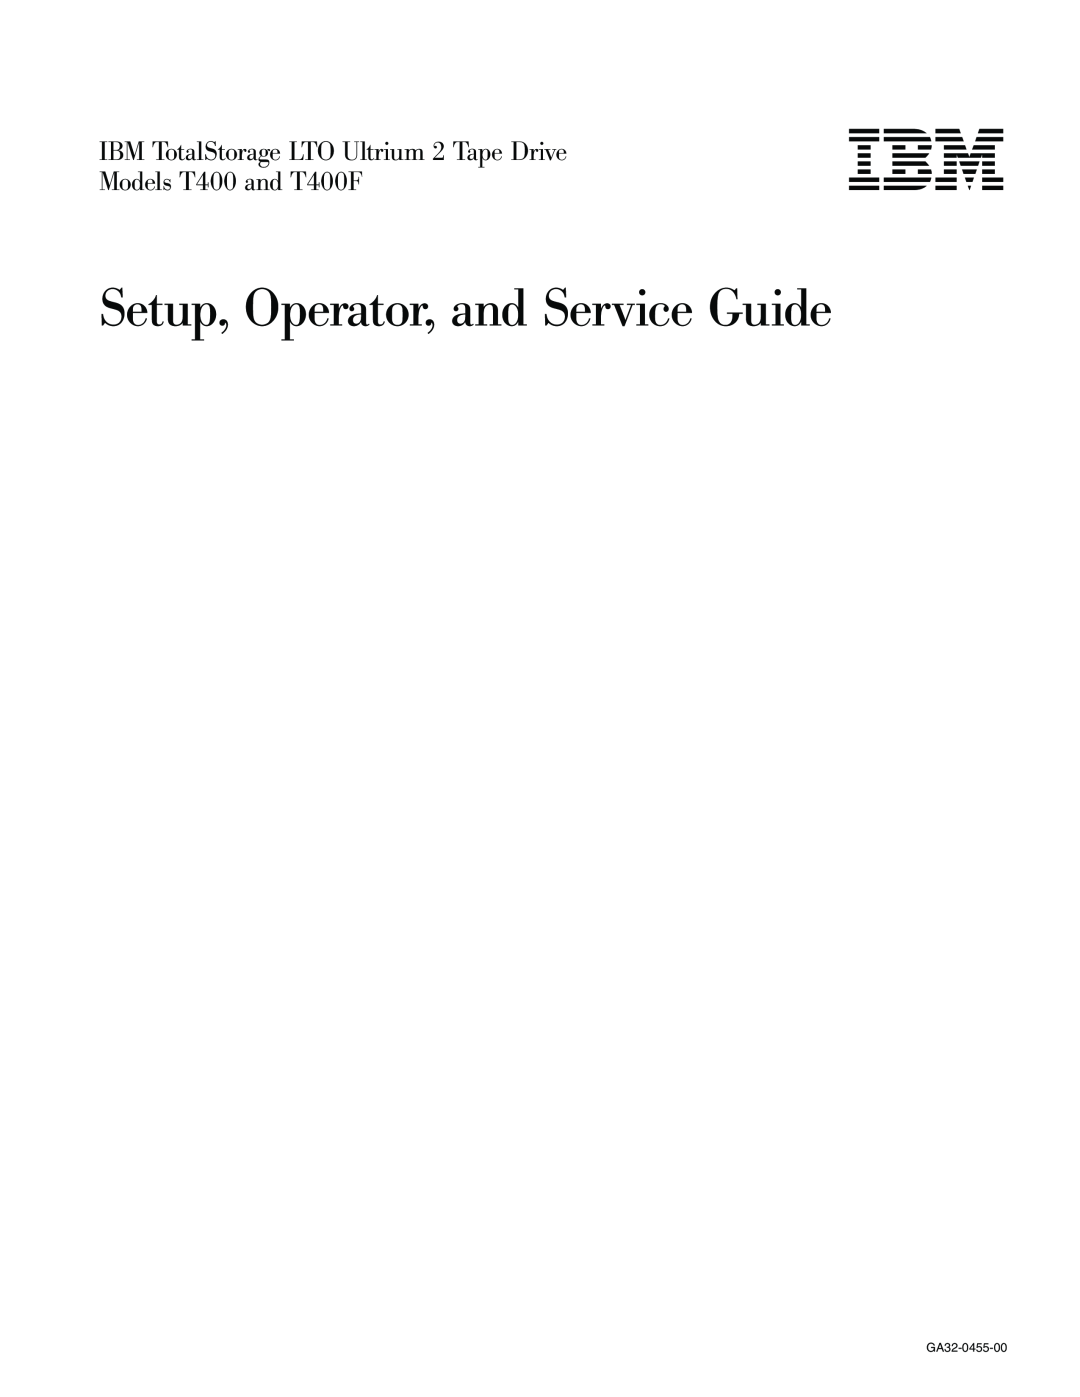 IBM Setup, Operator, and Service Guide, IBM TotalStorage LTO Ultrium 2 Tape Drive, Models T400 and T400F, GA32-0455-00 